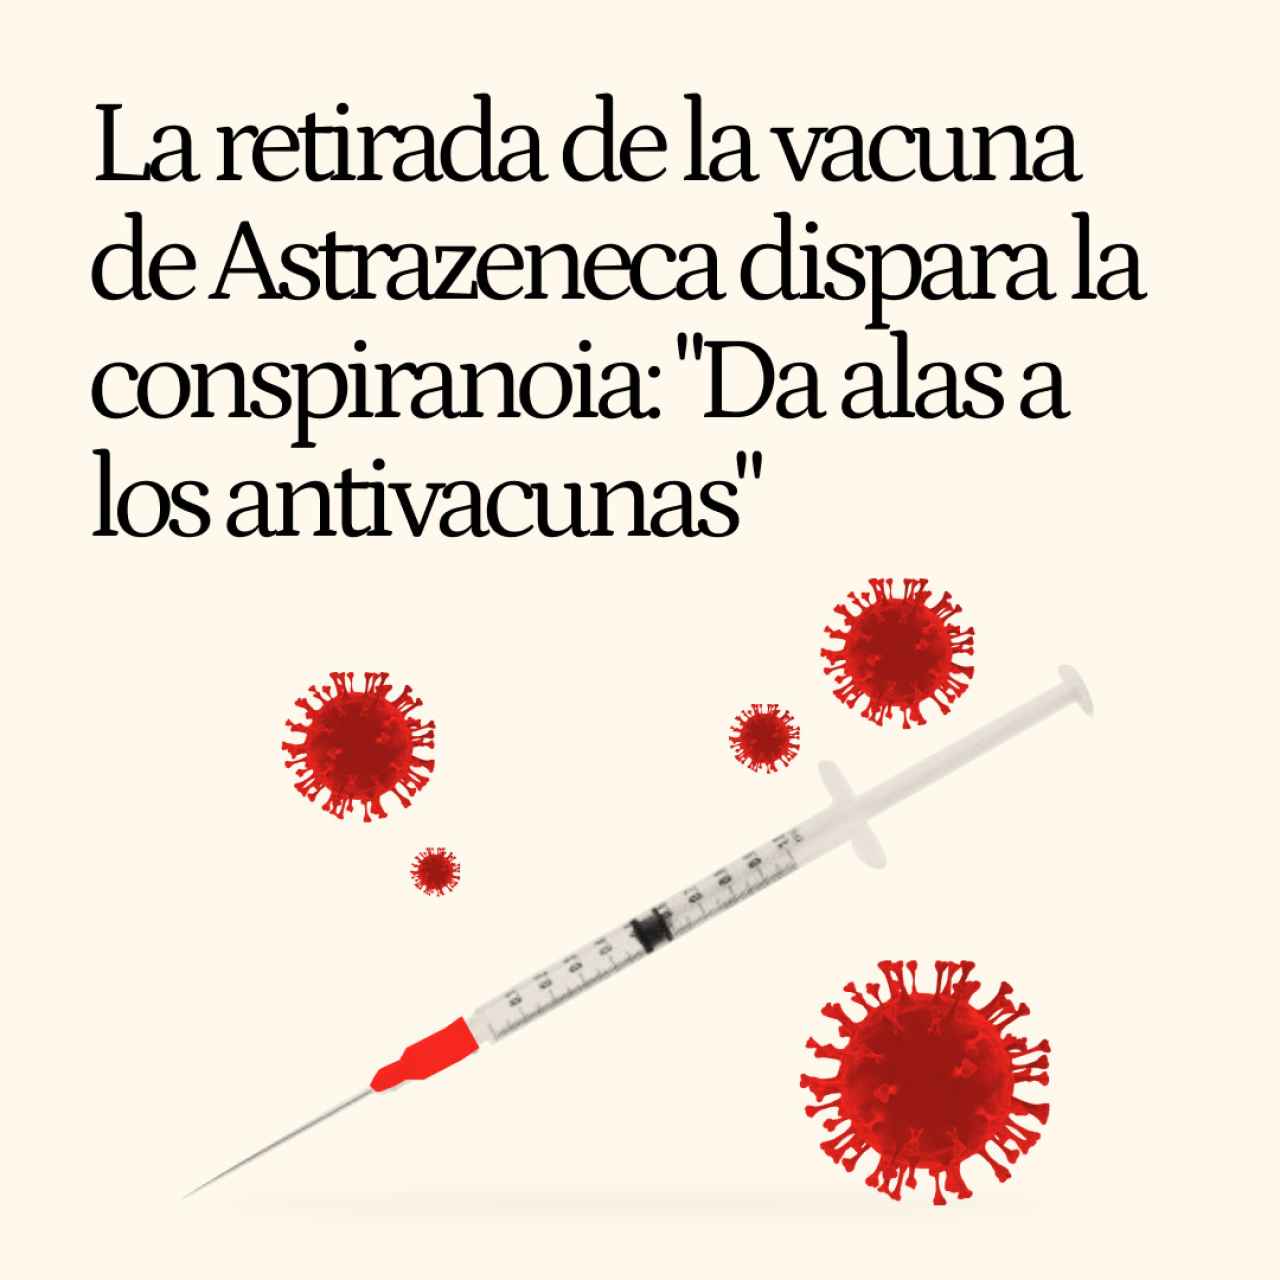 La retirada de la vacuna de Astrazeneca dispara la conspiranoia: 